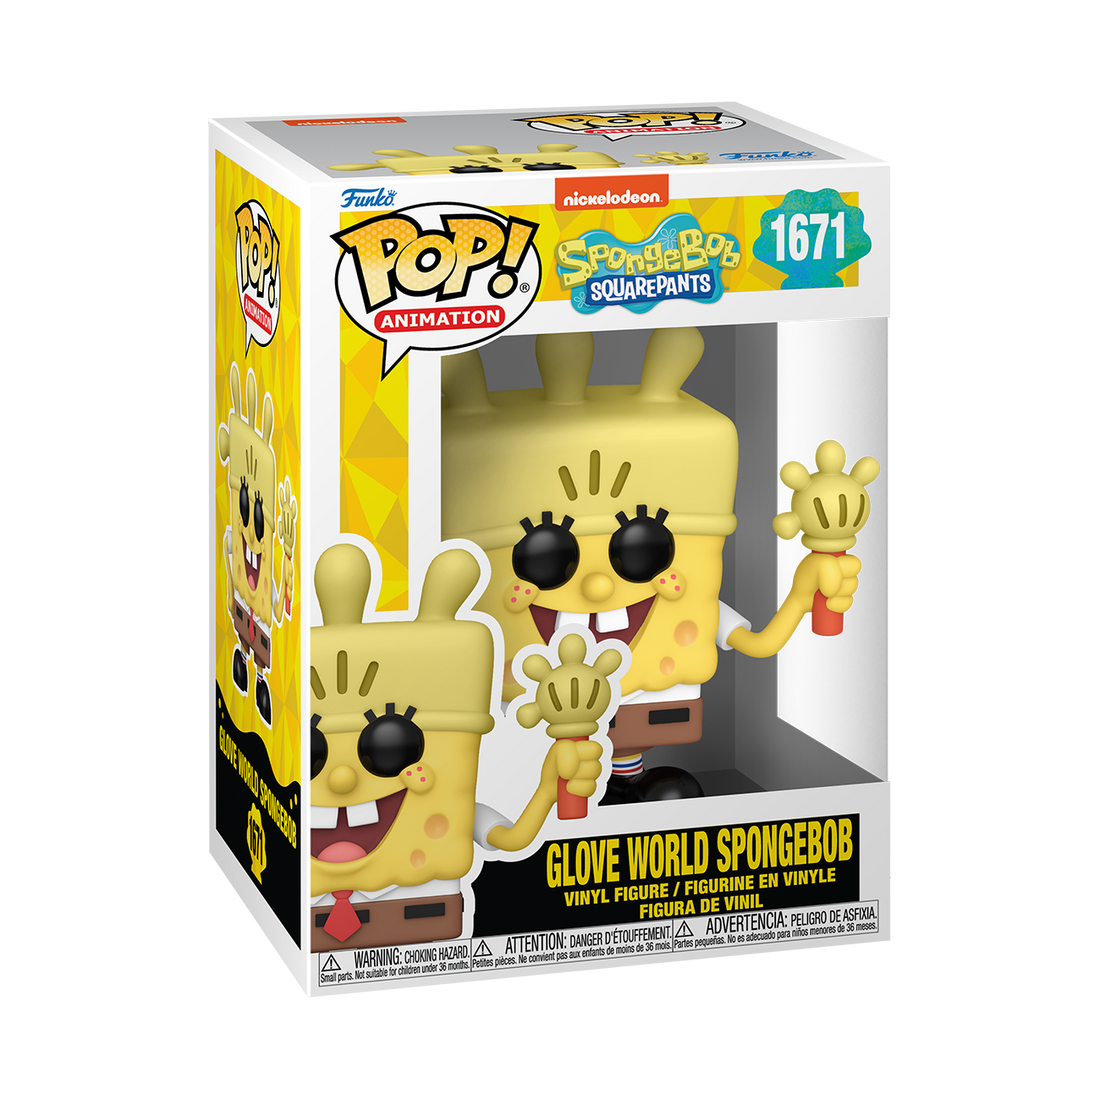 Funko Pop! Animation SpongeBob SquarePants 1671 Glove World SpongeBob Funko